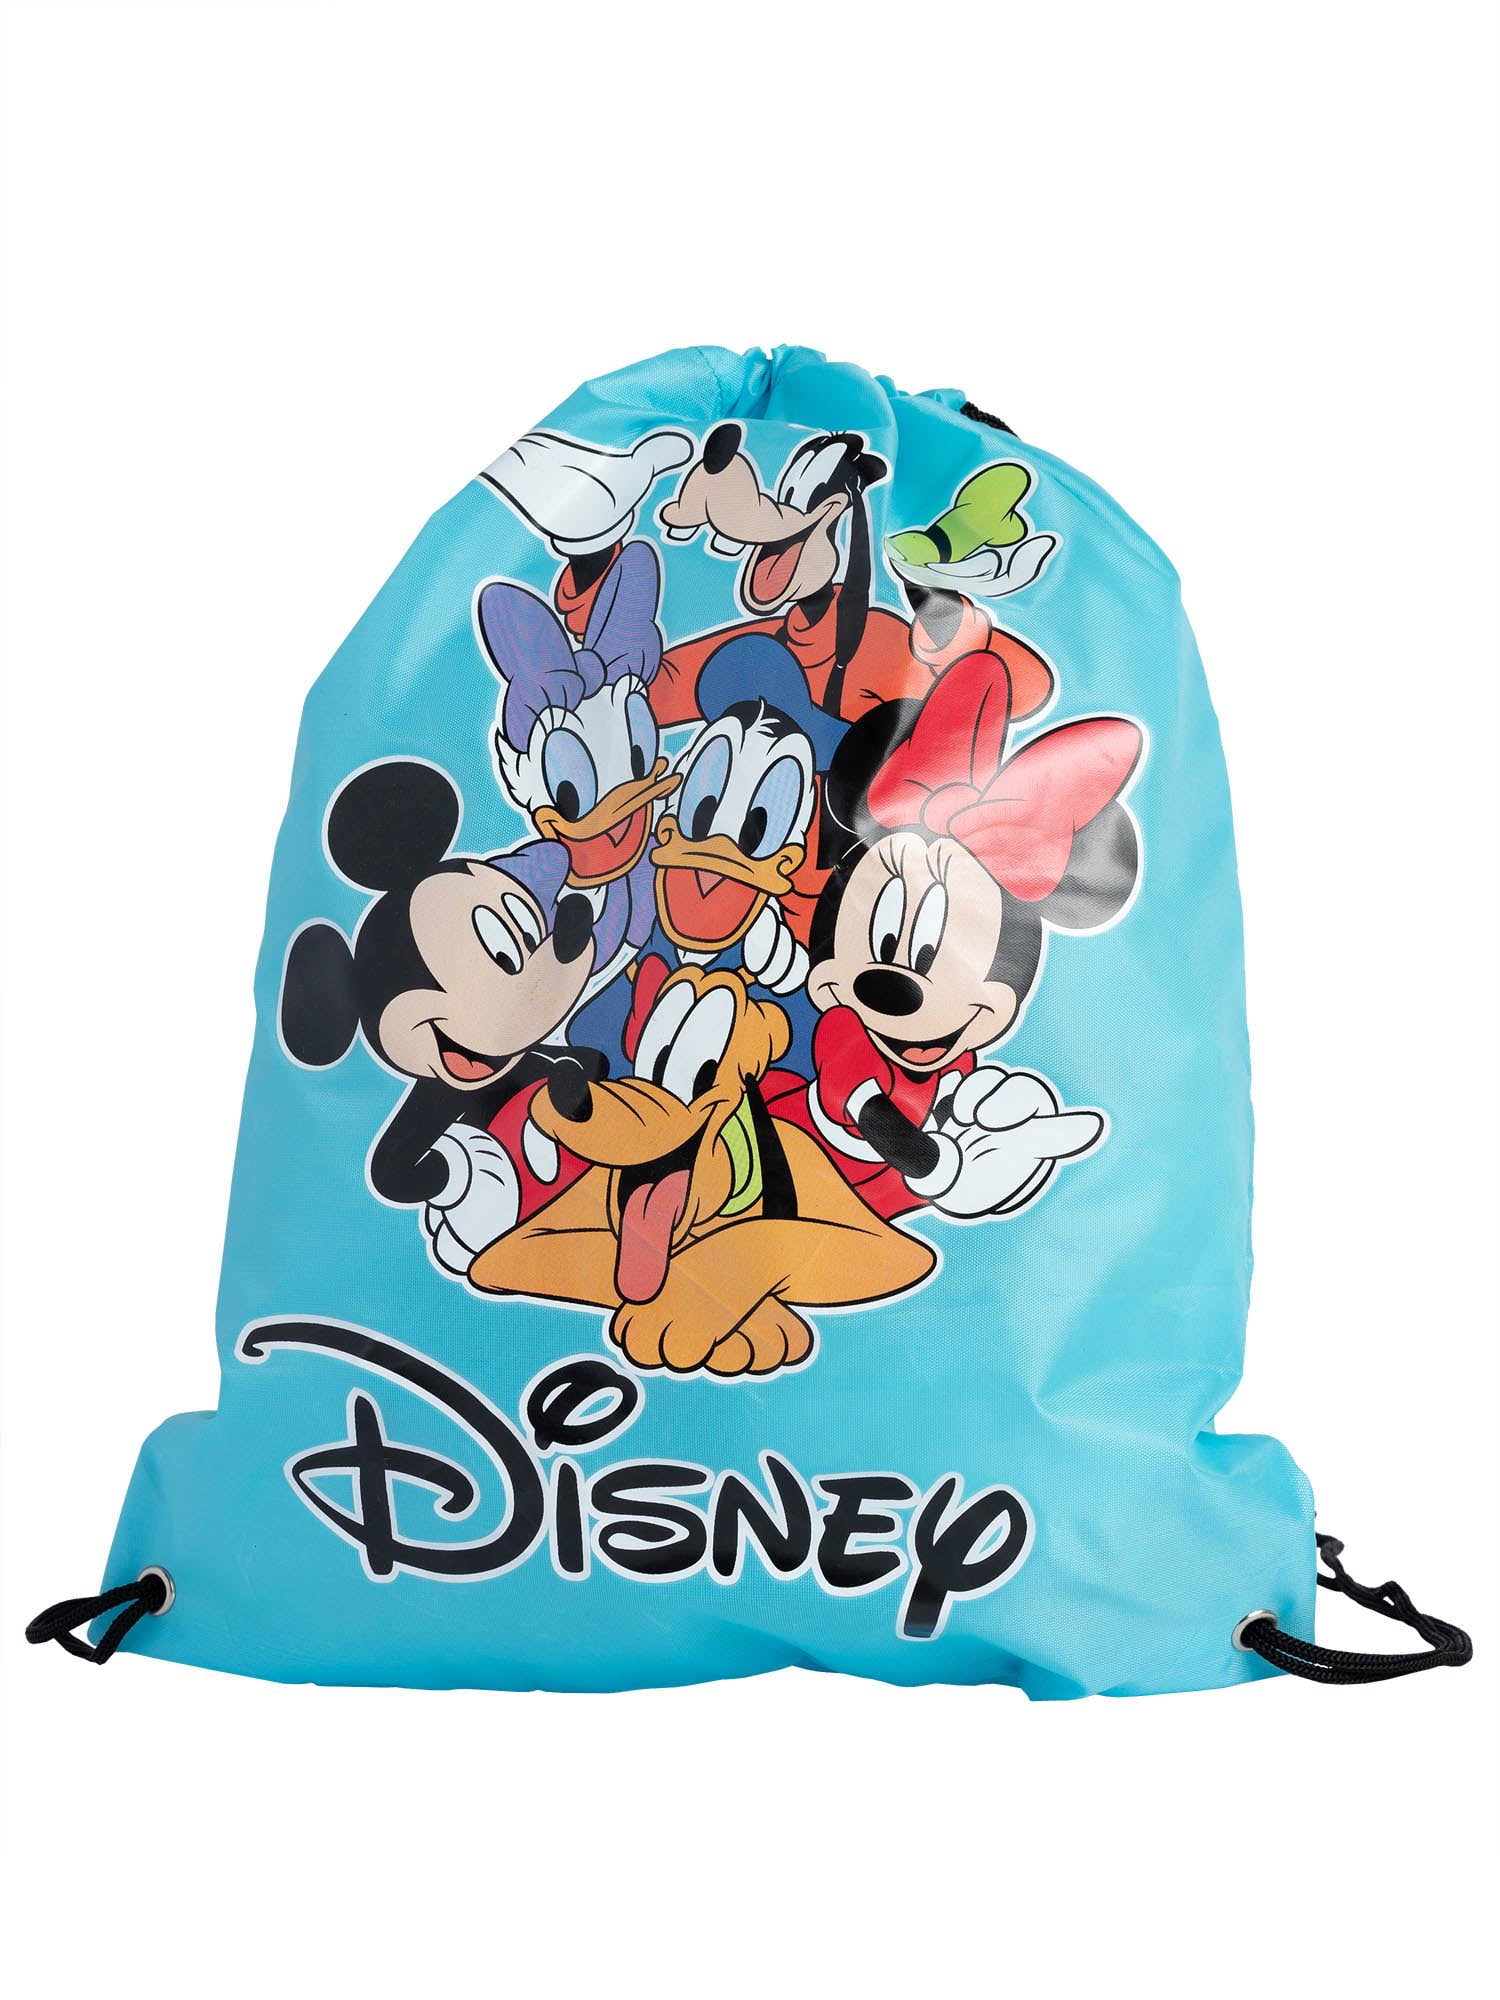 GIFT TOTE BAG! BRAND NEW Mickey Minnie Goofy Pluto Donald 12.5"x13"  SHOPPING 